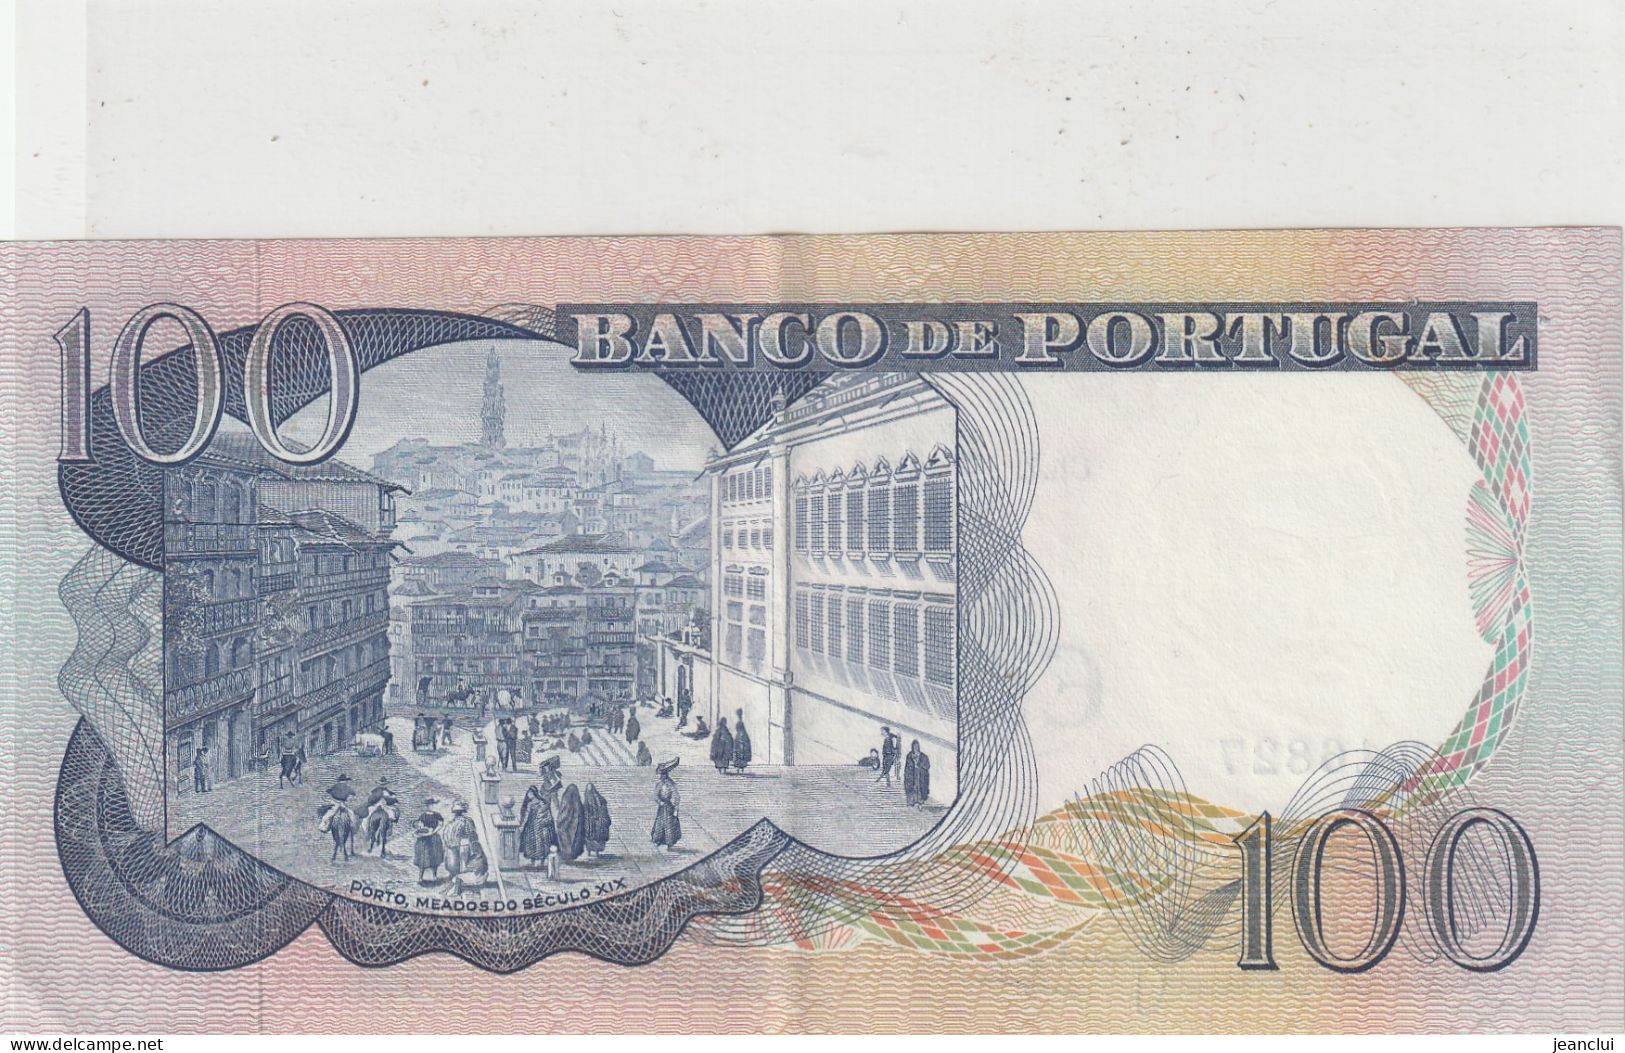 BANCO DE PORTUGAL  .  100 ESCUDOS . S. ANTONIO . 30-11-1965 .  N°  DHV 16827 . 2 SCANNES . BILLET EN BEL ETAT - Portugal